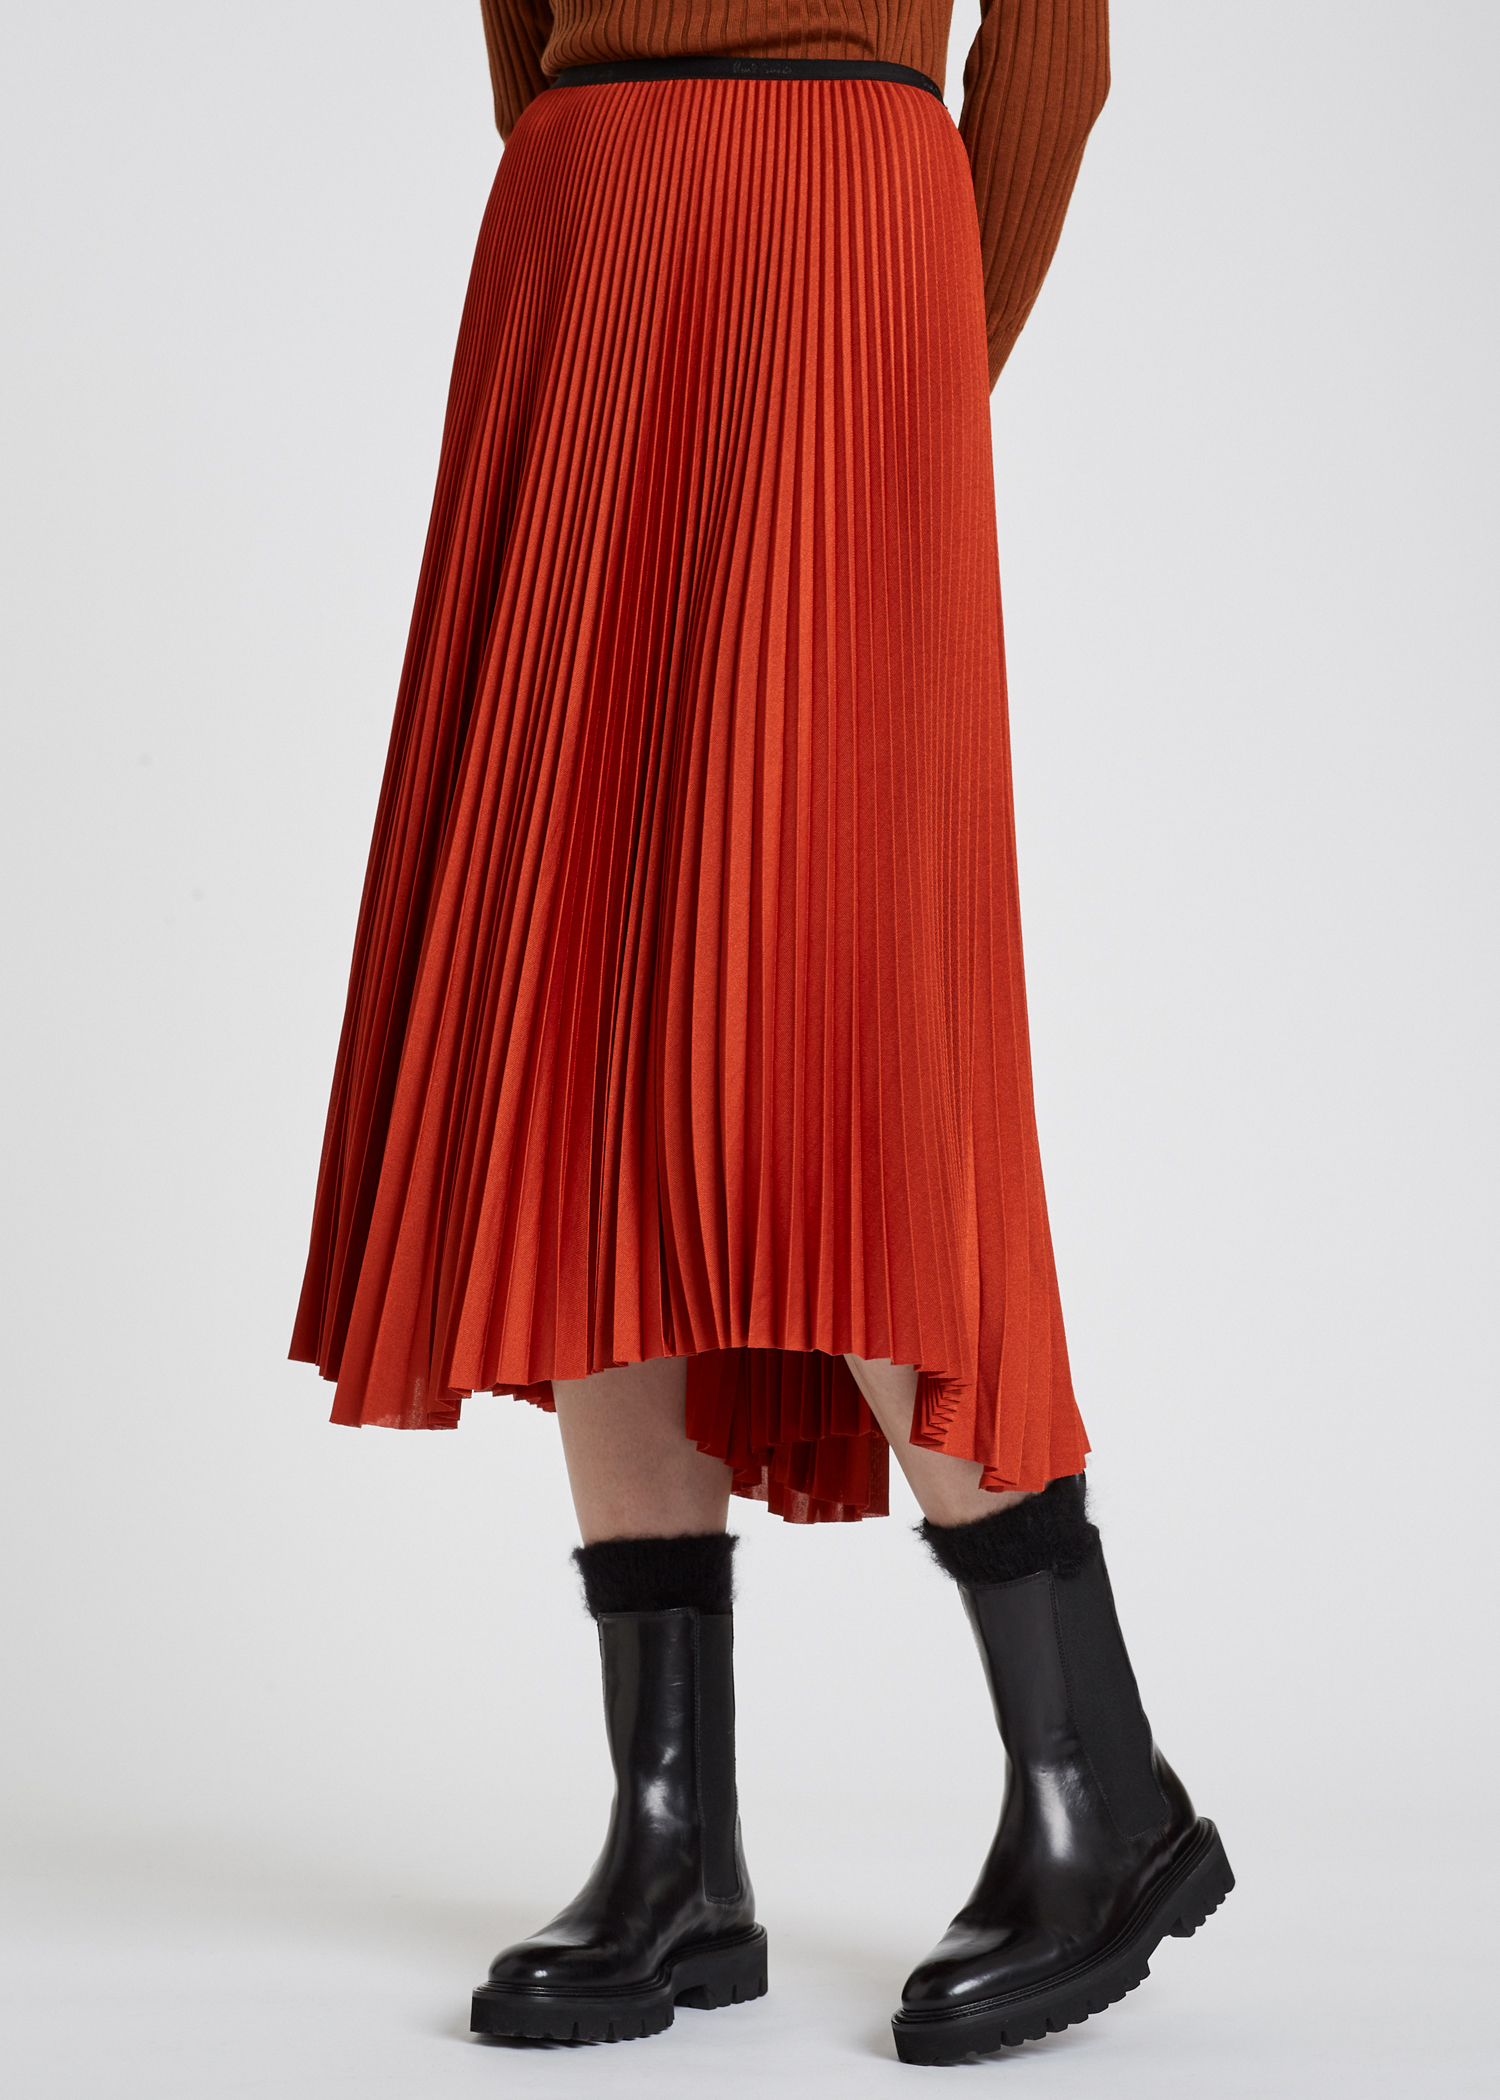 Women's Rust Pleated Skirt